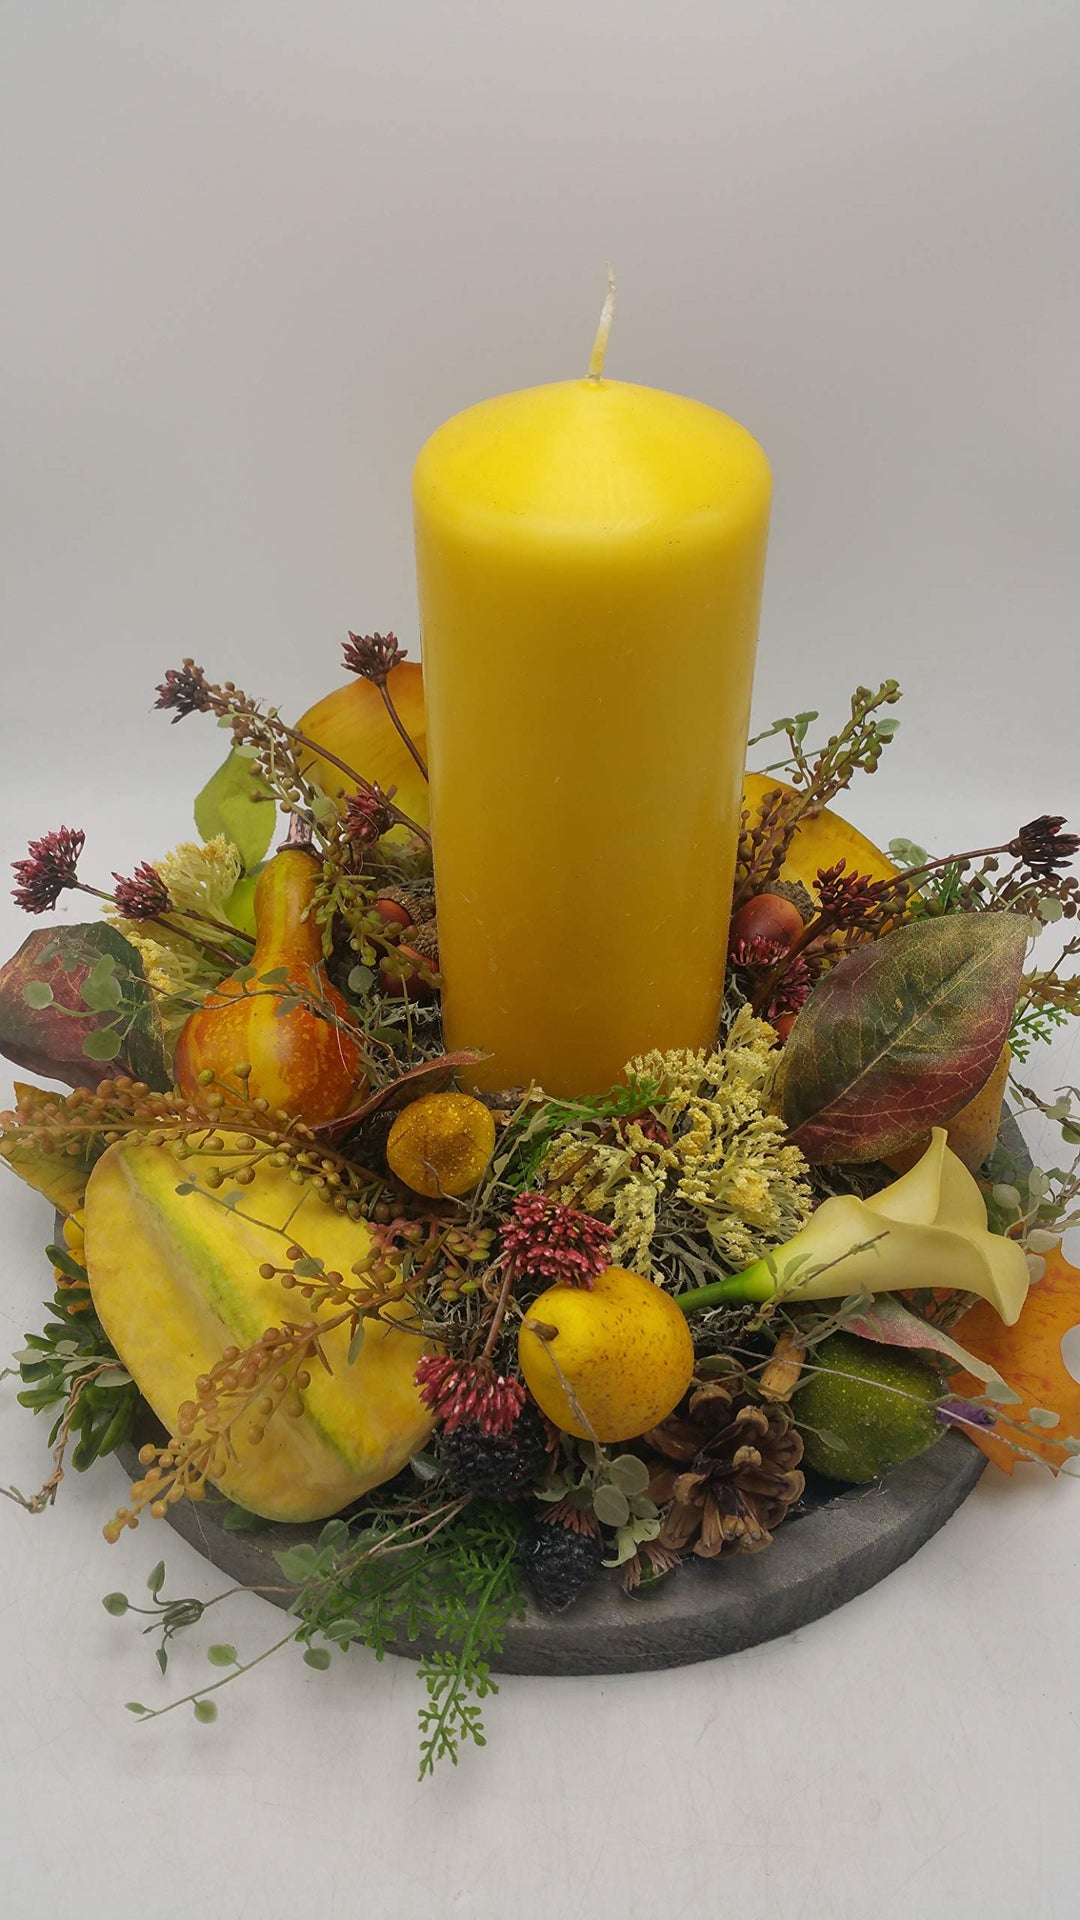 Tischgesteck Herbstgesteck Kunstfloristik Kerze Calla Laub Birnen Sternfrucht